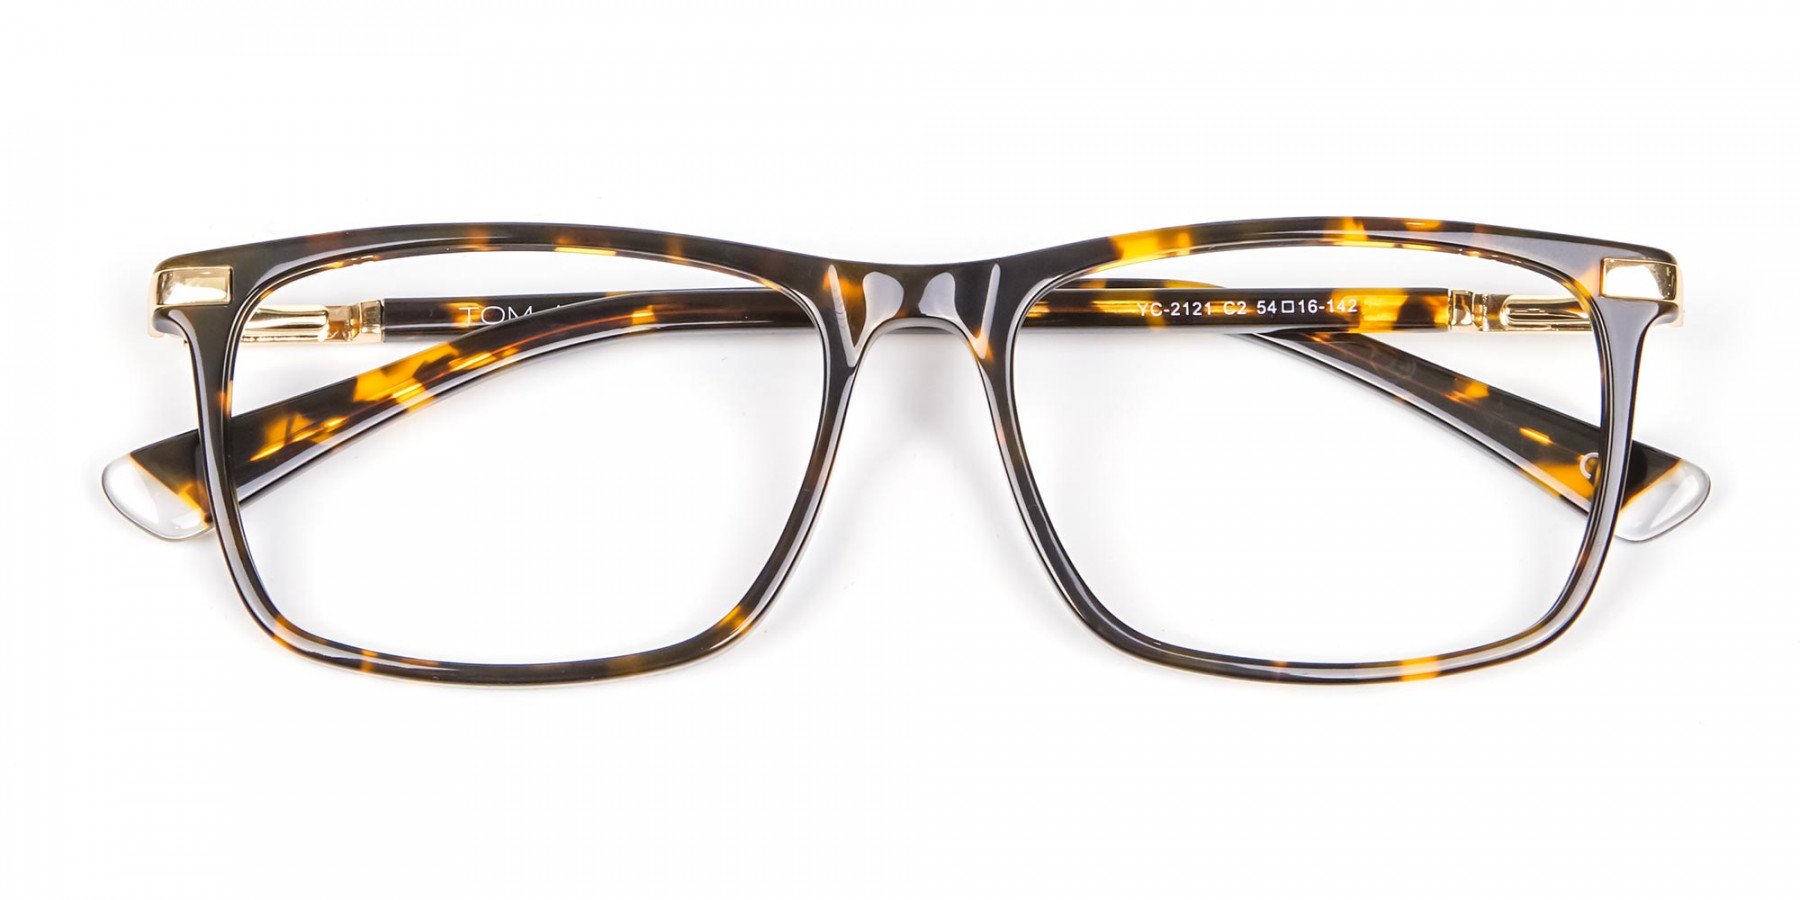 Tortoiseshell Glasses with Gold Hinge - 1